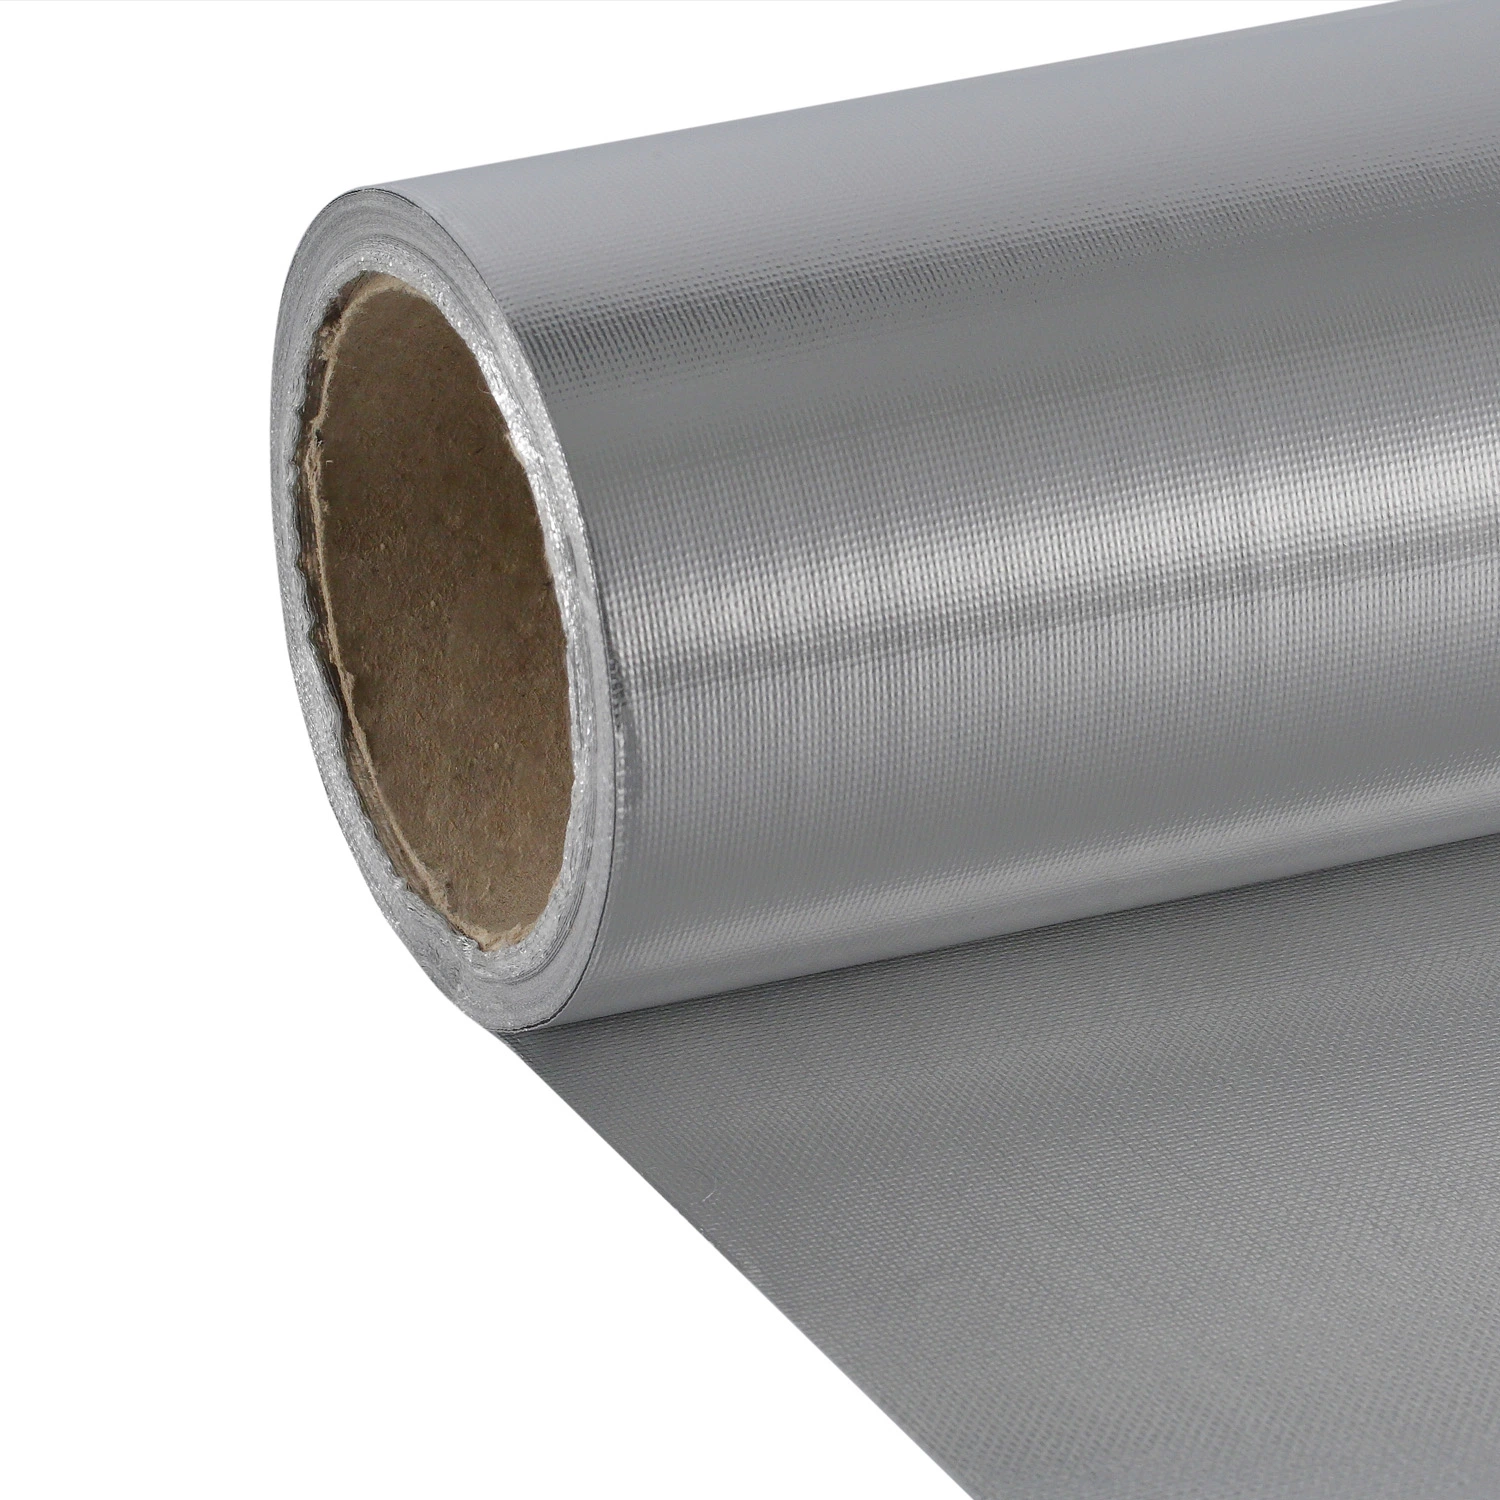 El silicato de aluminio laminado de fibra cerámica de tela de fibra de vidrio Serises tela ignífuga